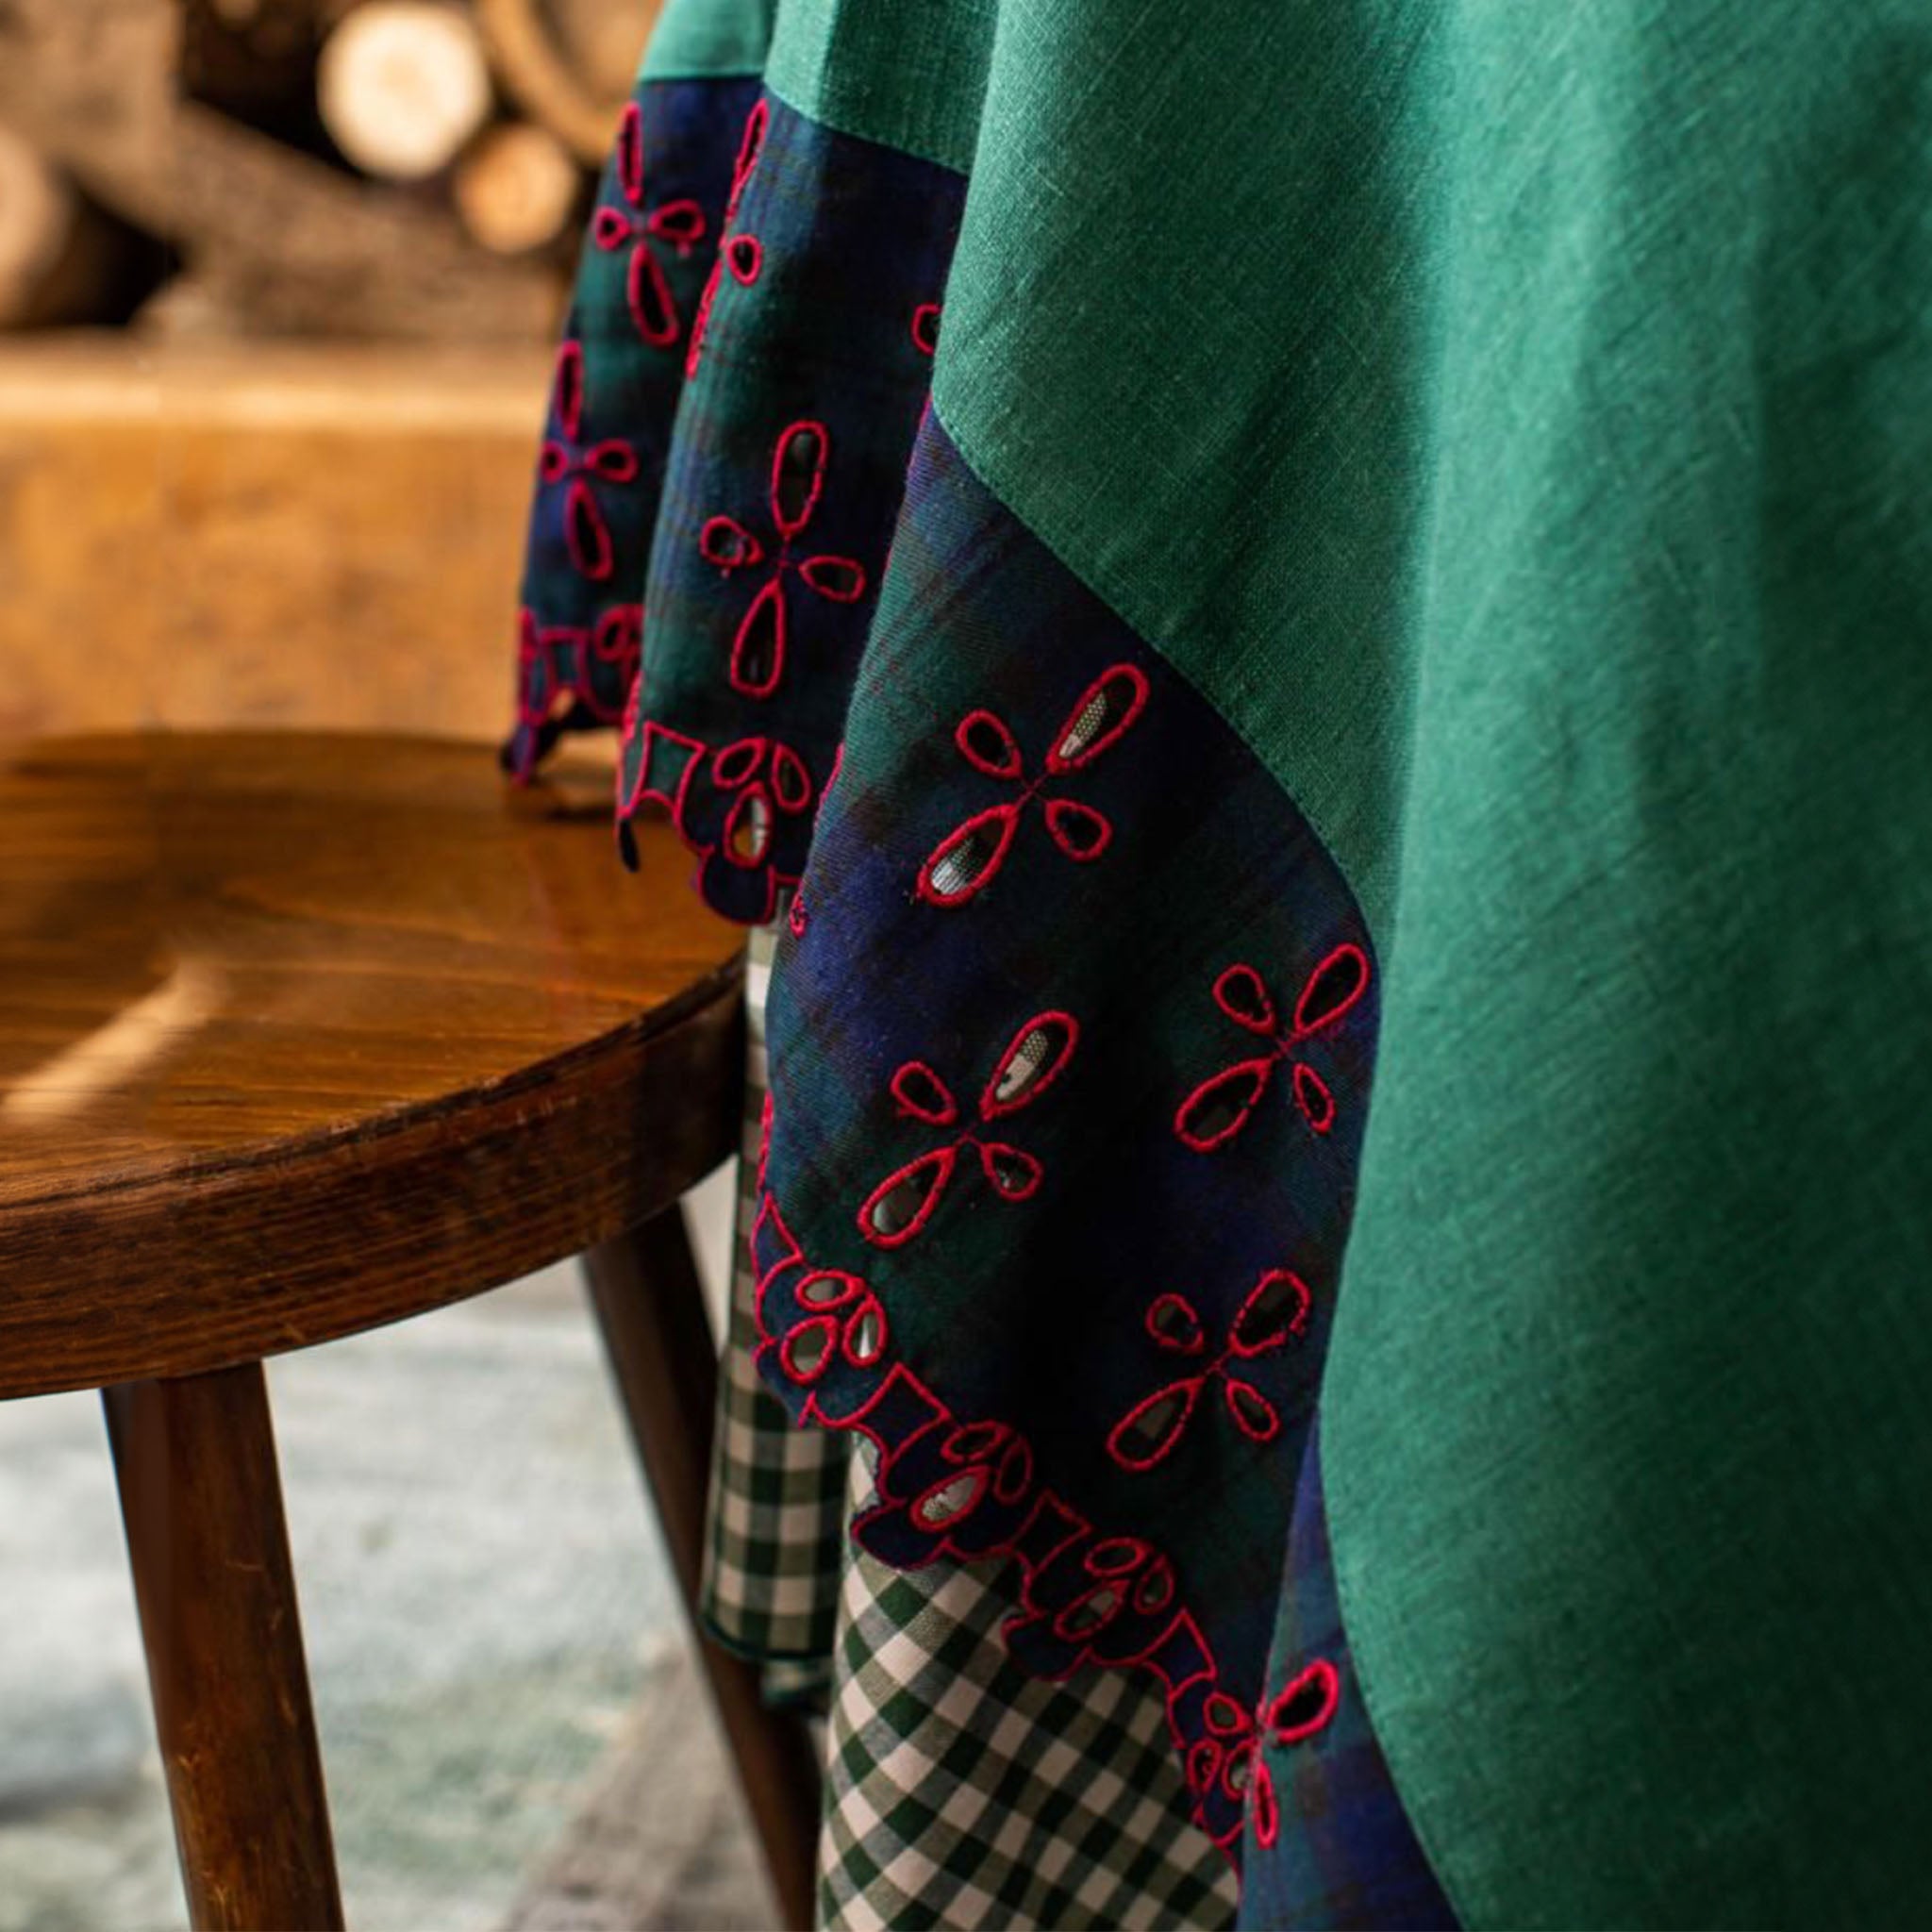 Amalfi Linen Tablecloth Bosco - Rosso - Scozzese - Blu 180 x 220 cm